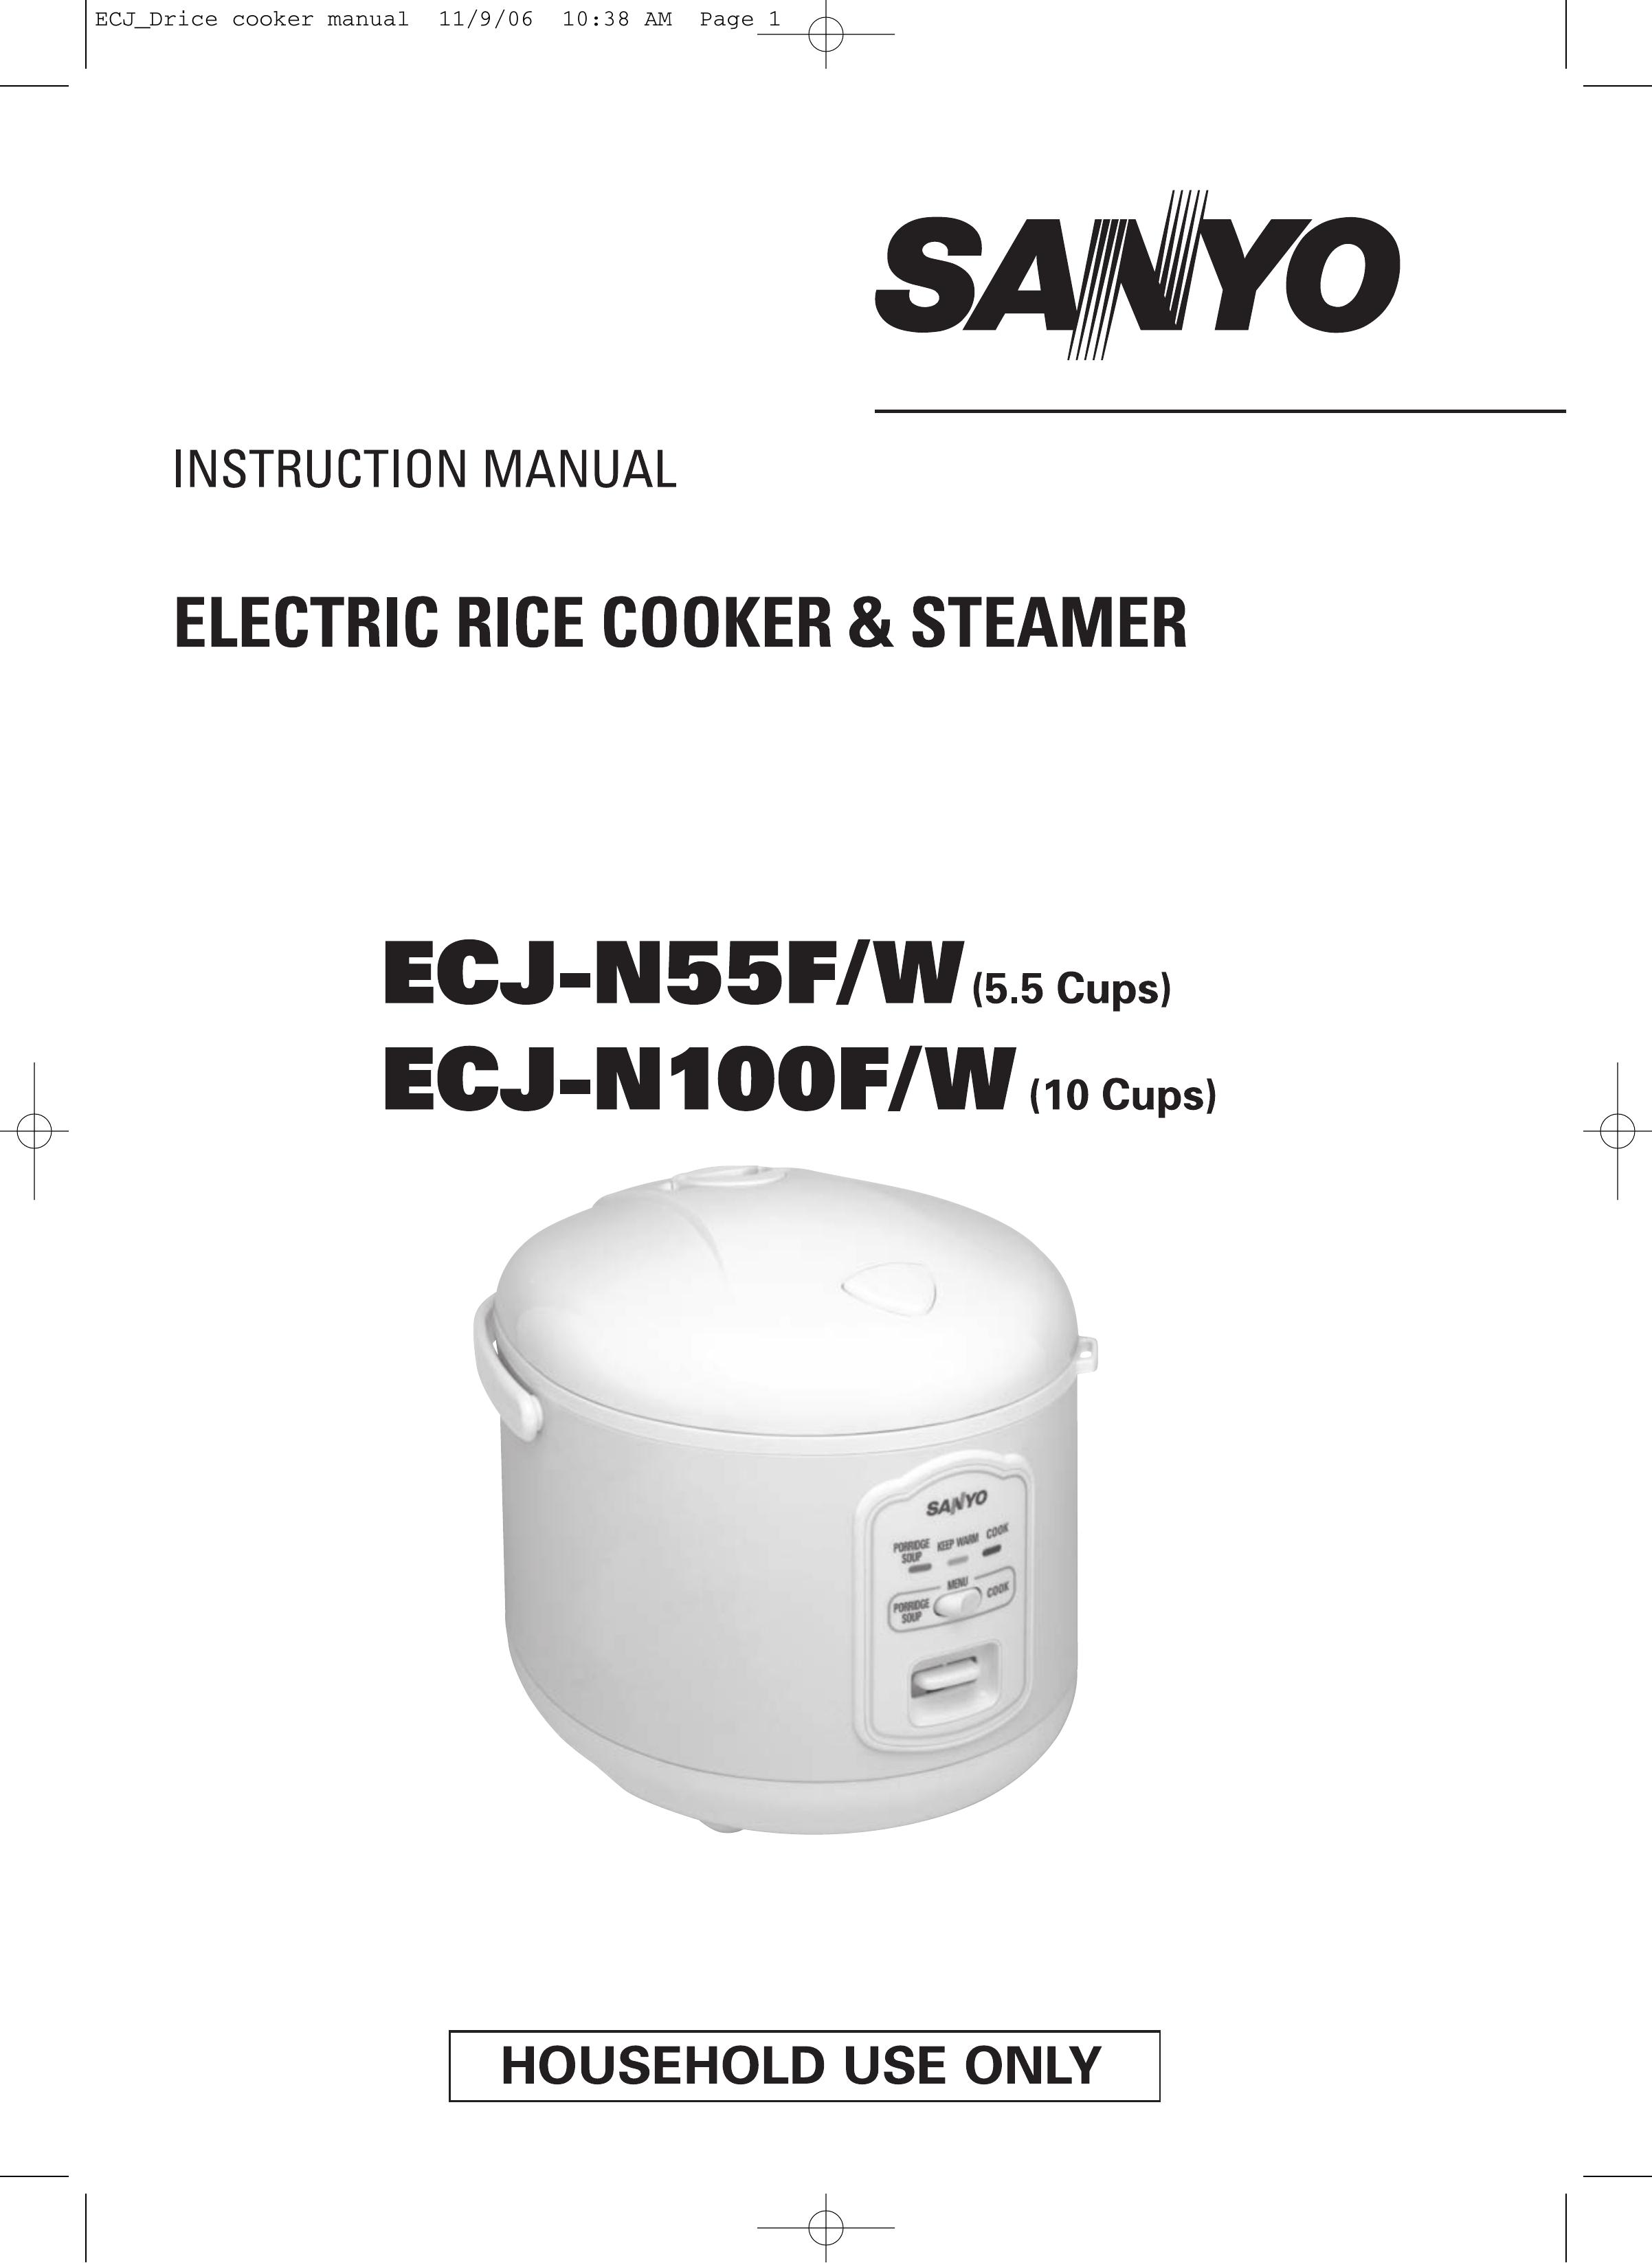 Sanyo ECJ-N100W Rice Cooker User Manual